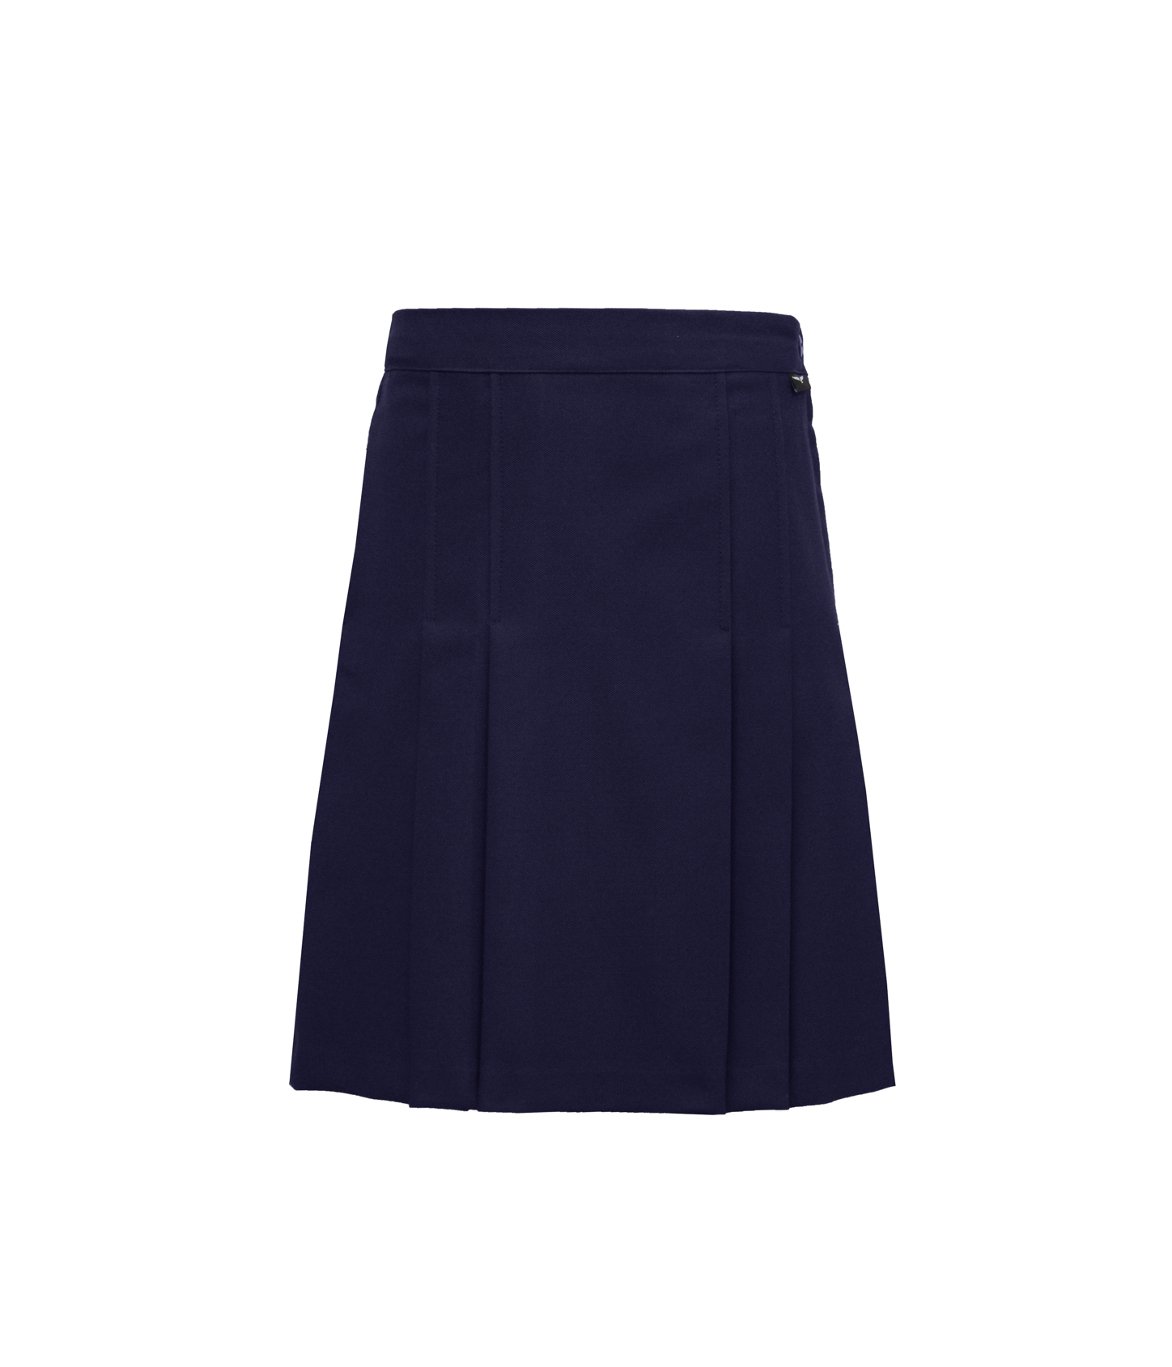 Navy School Skirts Australia | Quality Primary School Wear Quality Primary  School Wear